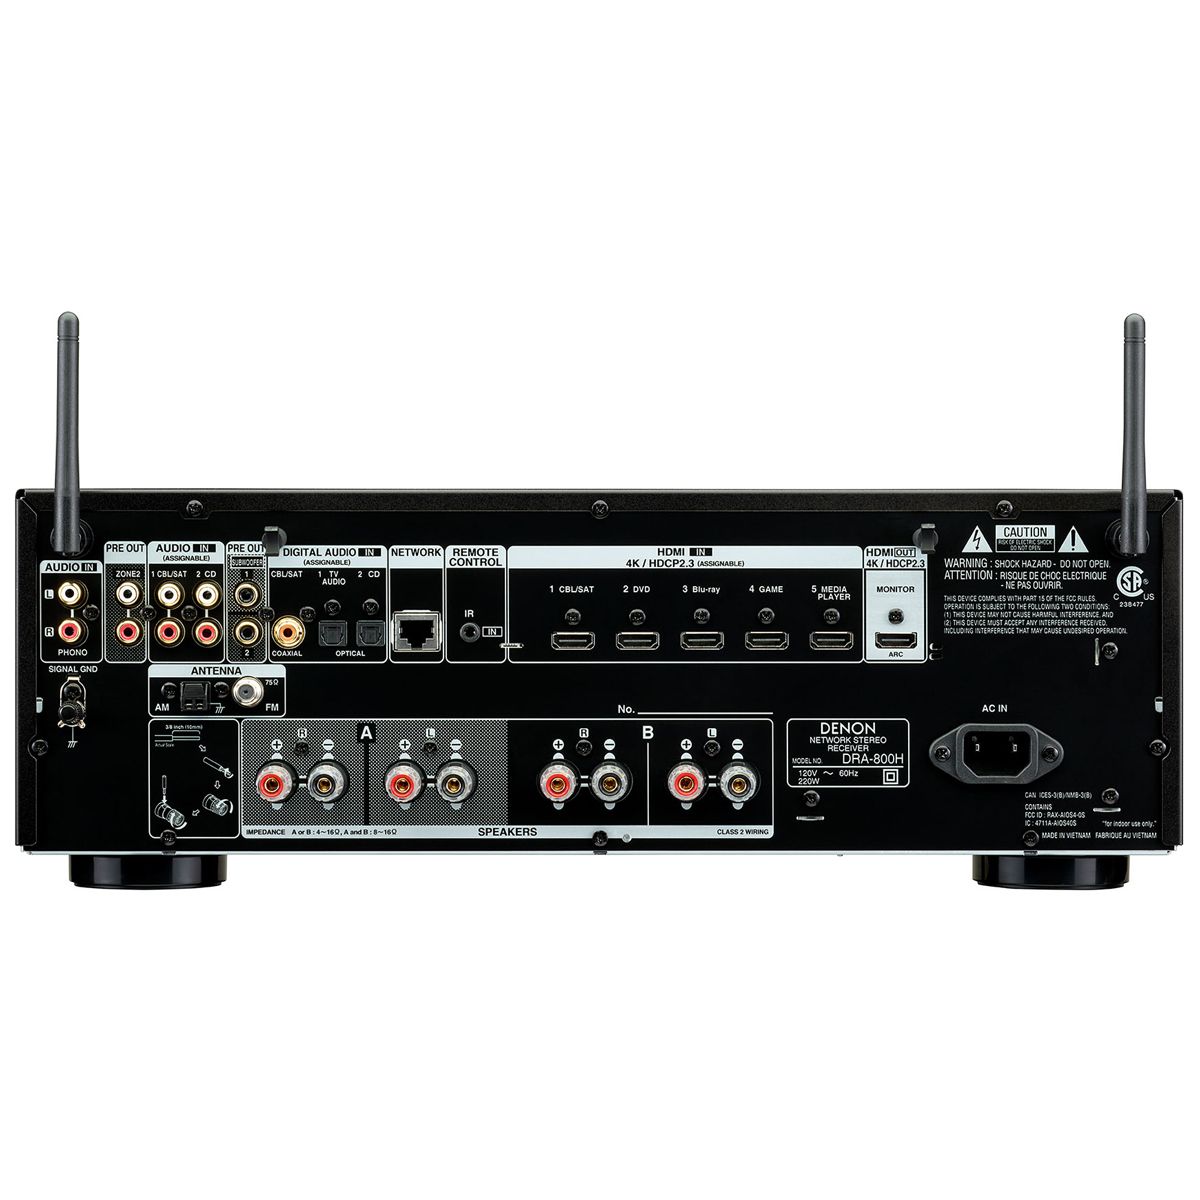 Denon DRA-800H Stereo Network Receiver - rear view